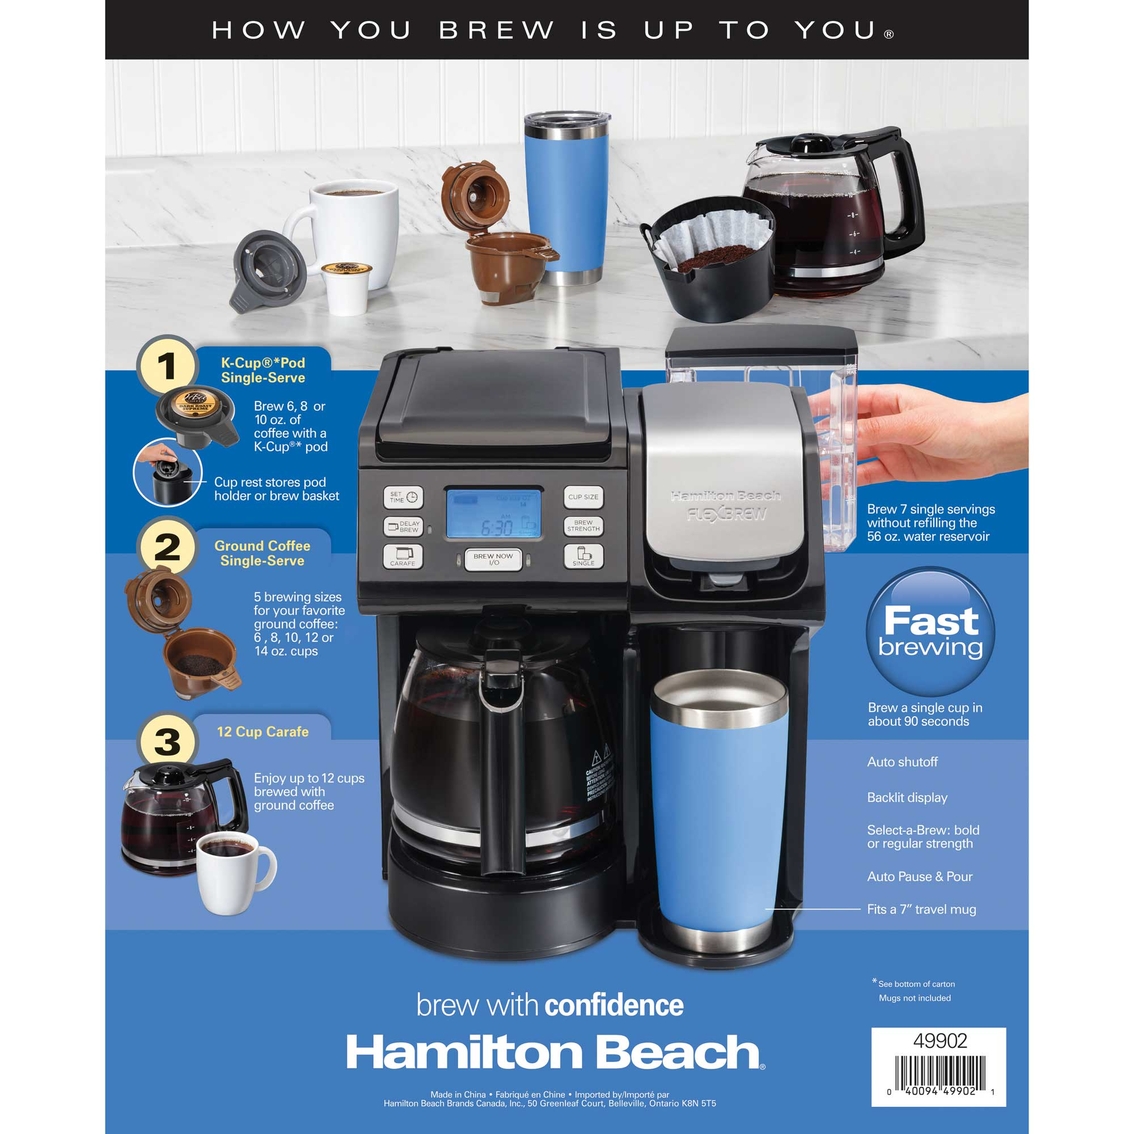 Hamilton Beach Flexbrew Trio Coffee Maker, Coffee, Tea & Espresso, Furniture & Appliances